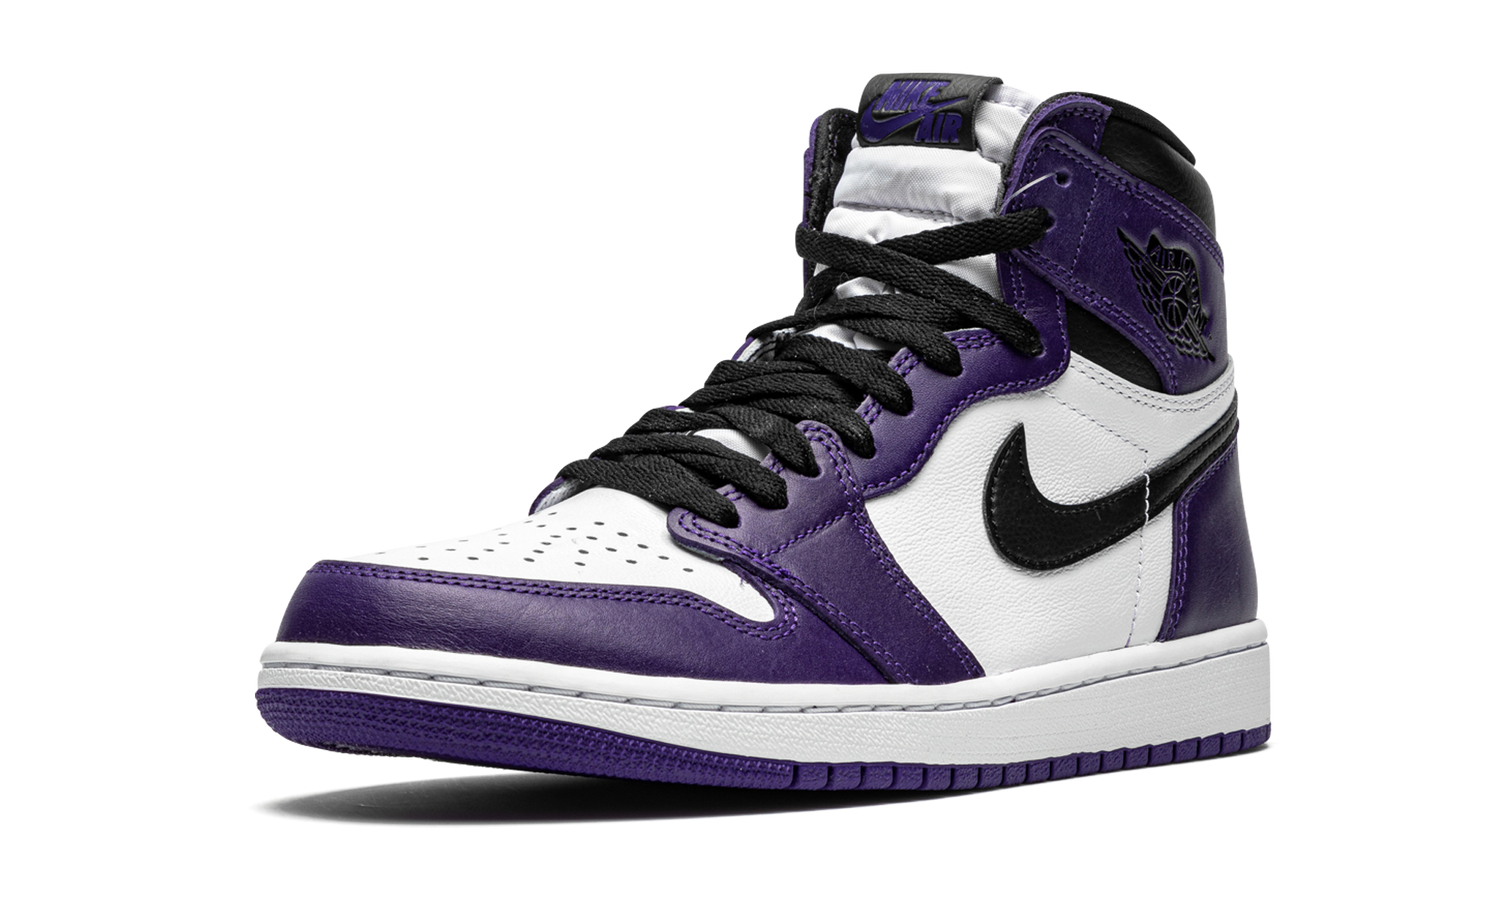 Jordan 1 High OG “Court Purple 2.0 